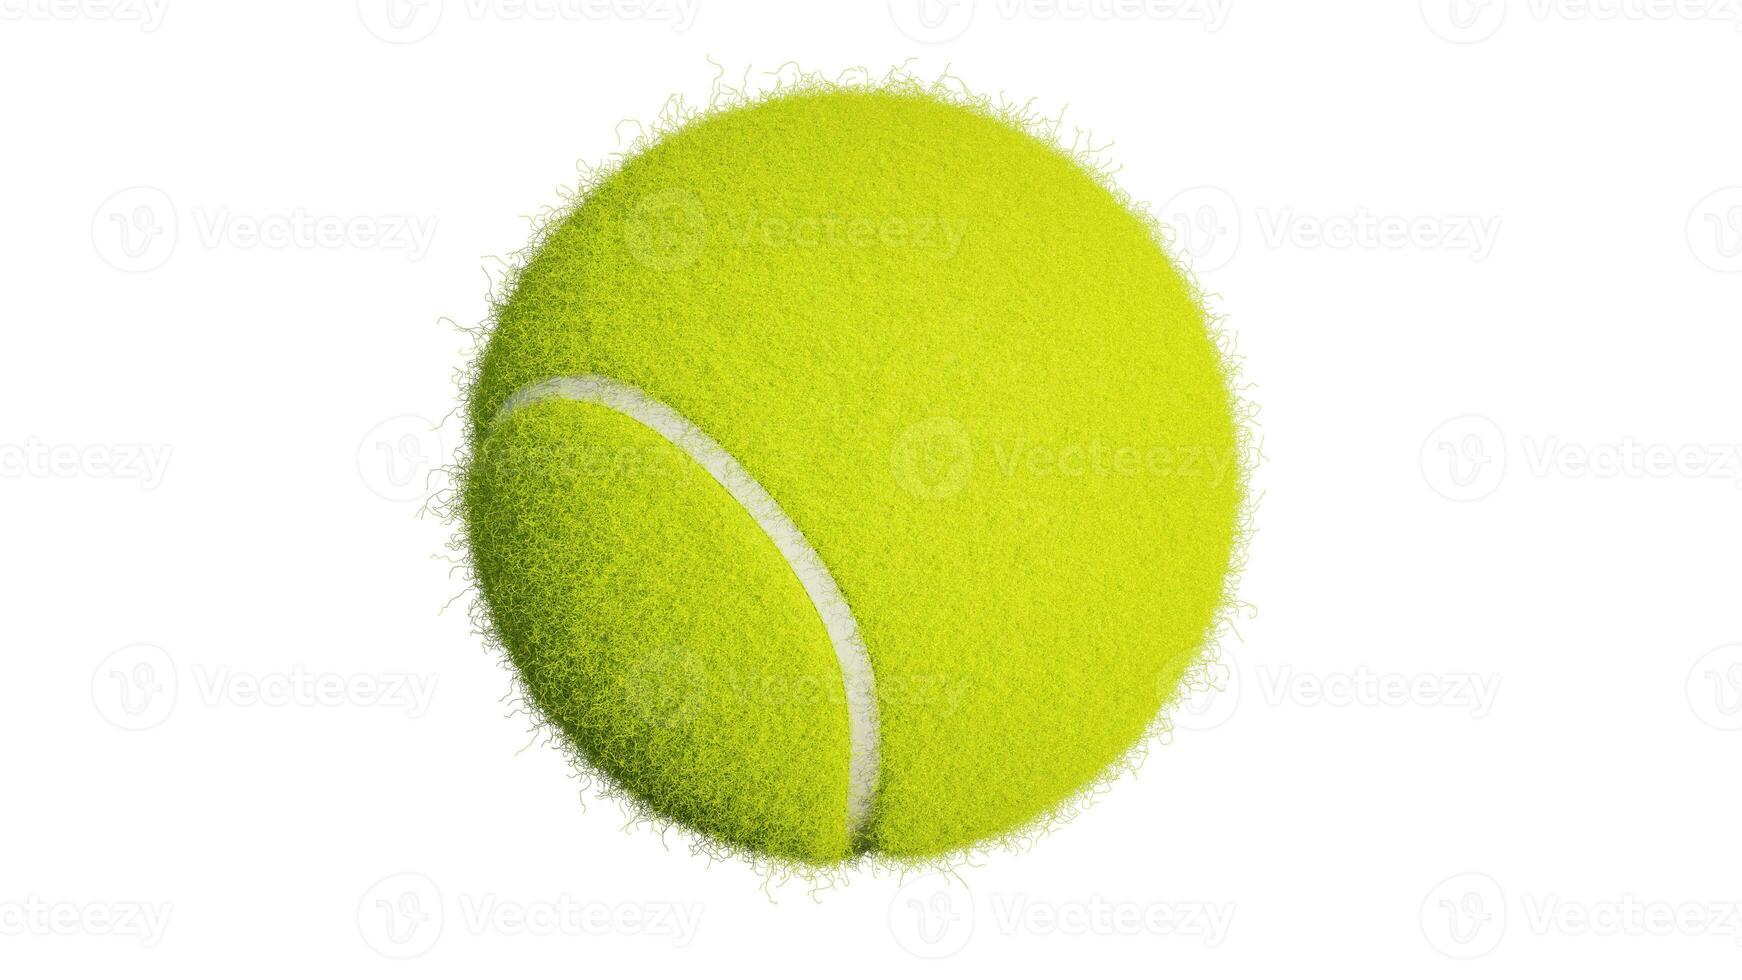 Bright green brand new tennis ball photo